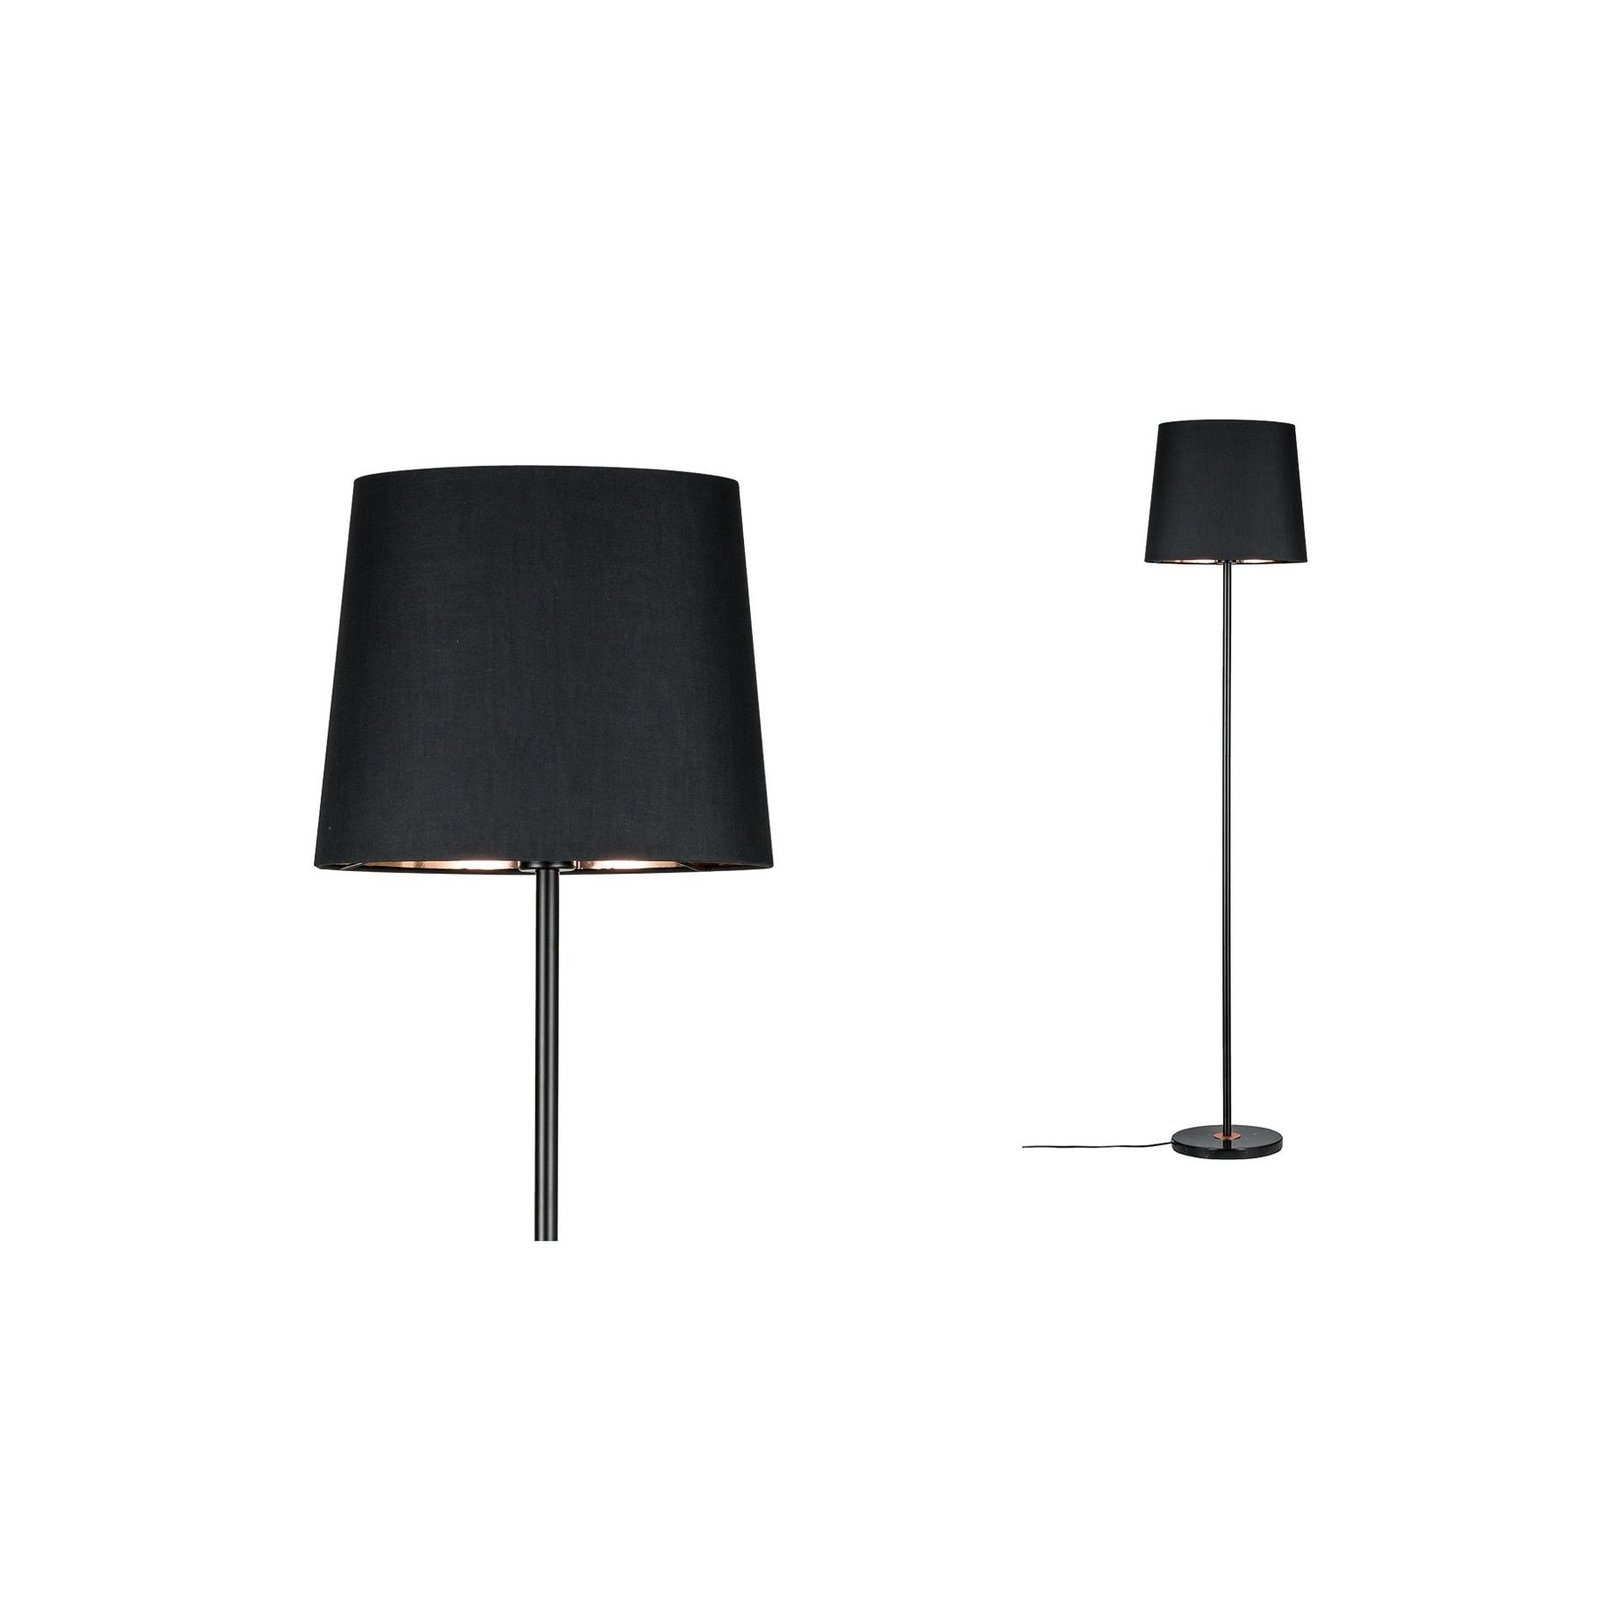 Black fabric floor lamp Enja with marble base